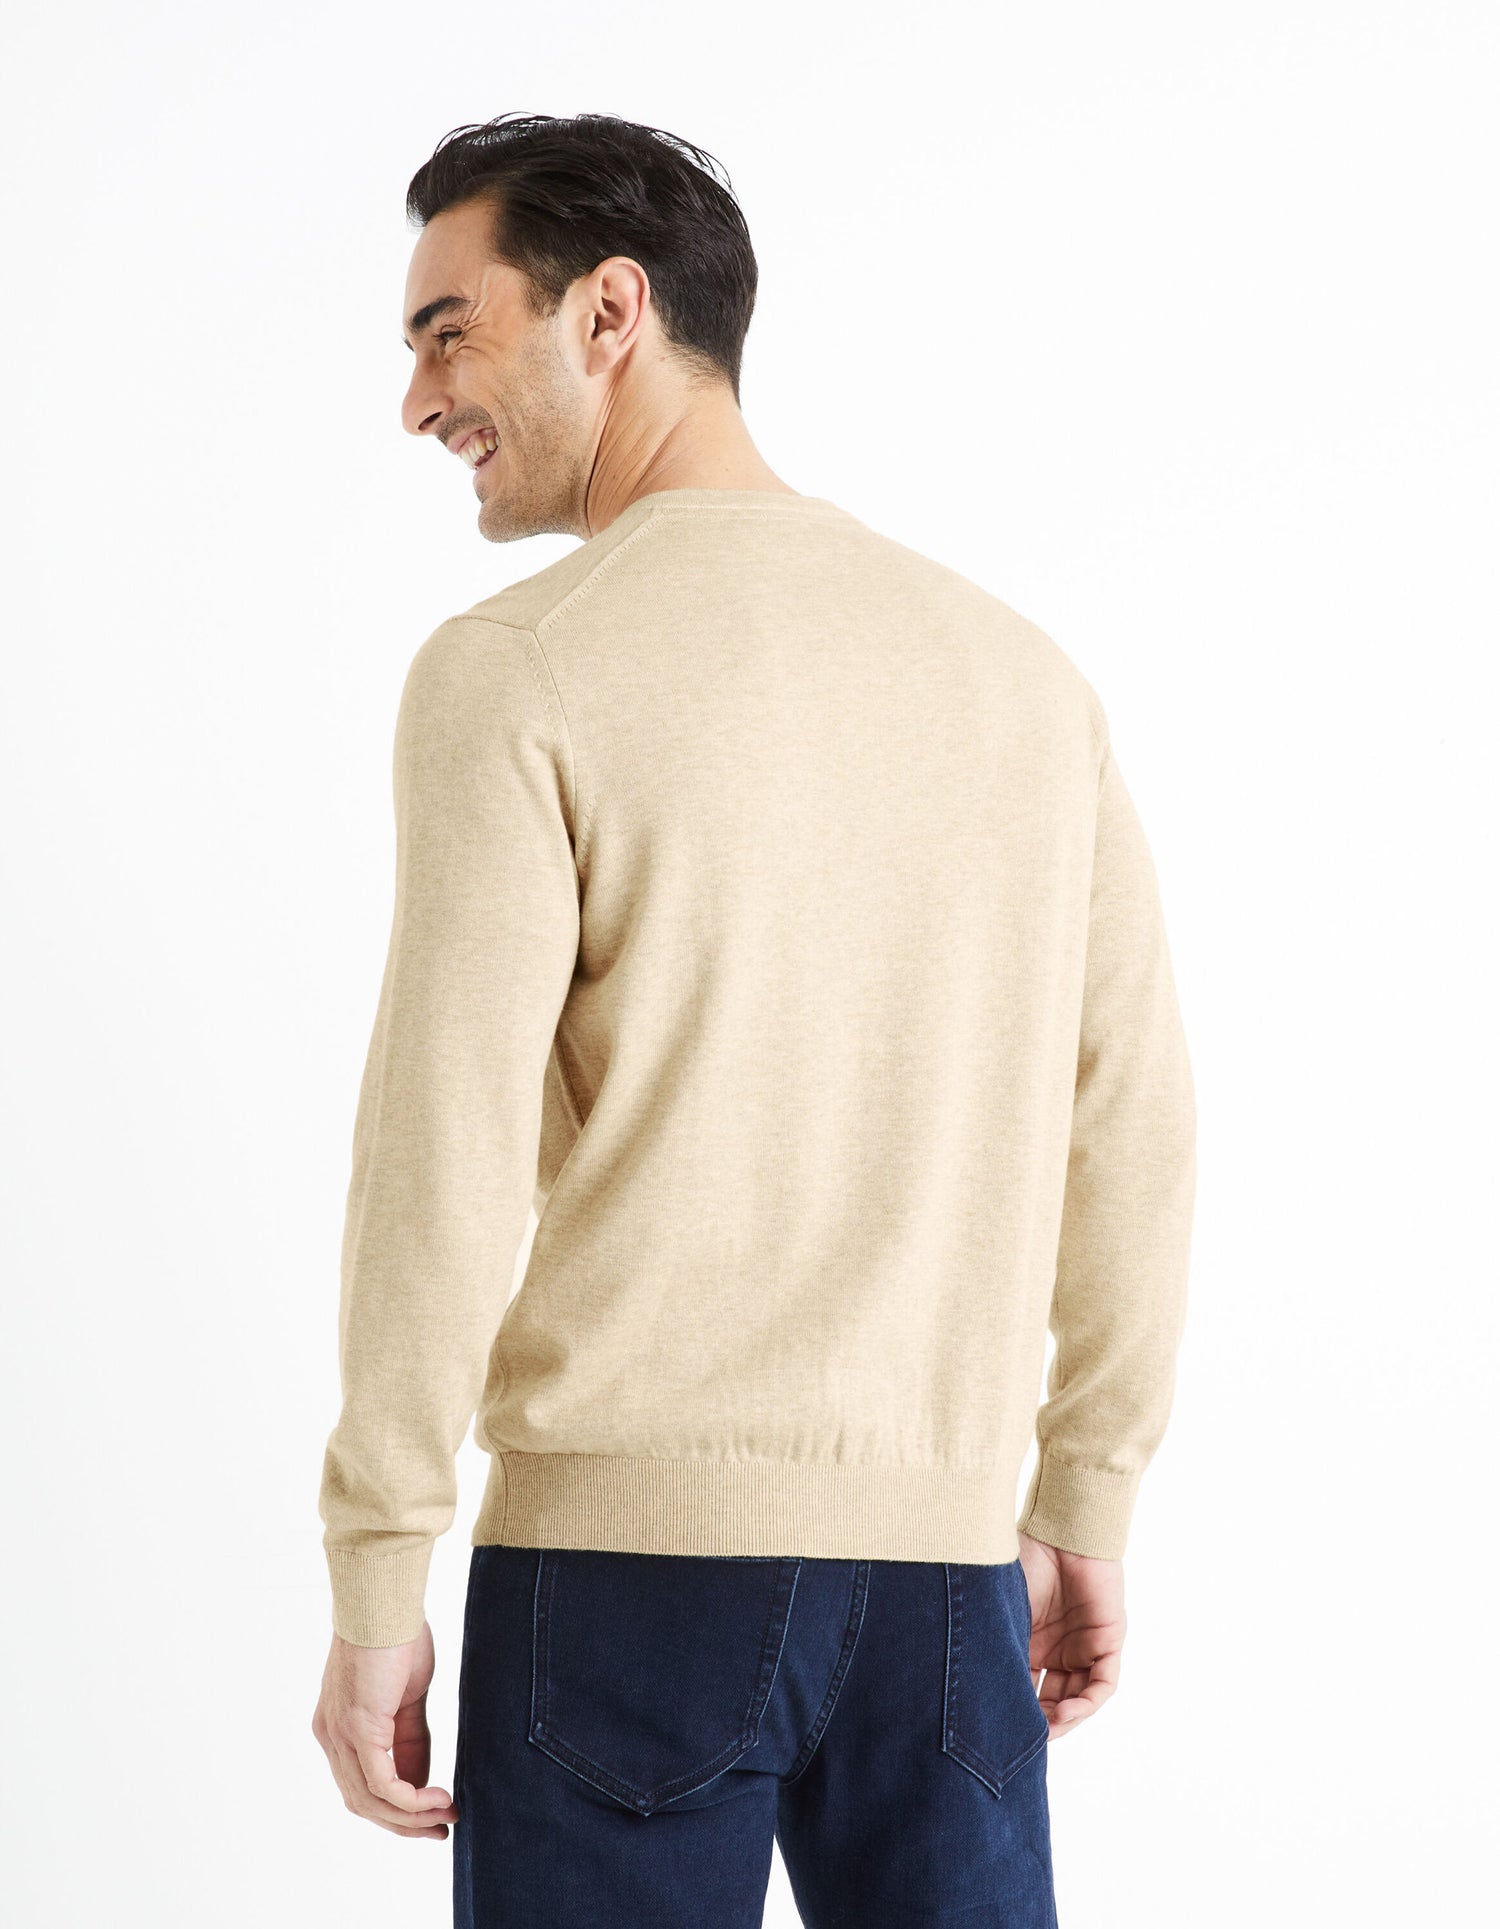 V-Neck Sweater 100% Cotton - Beige_DECOTONV_BEIGE MEL_04